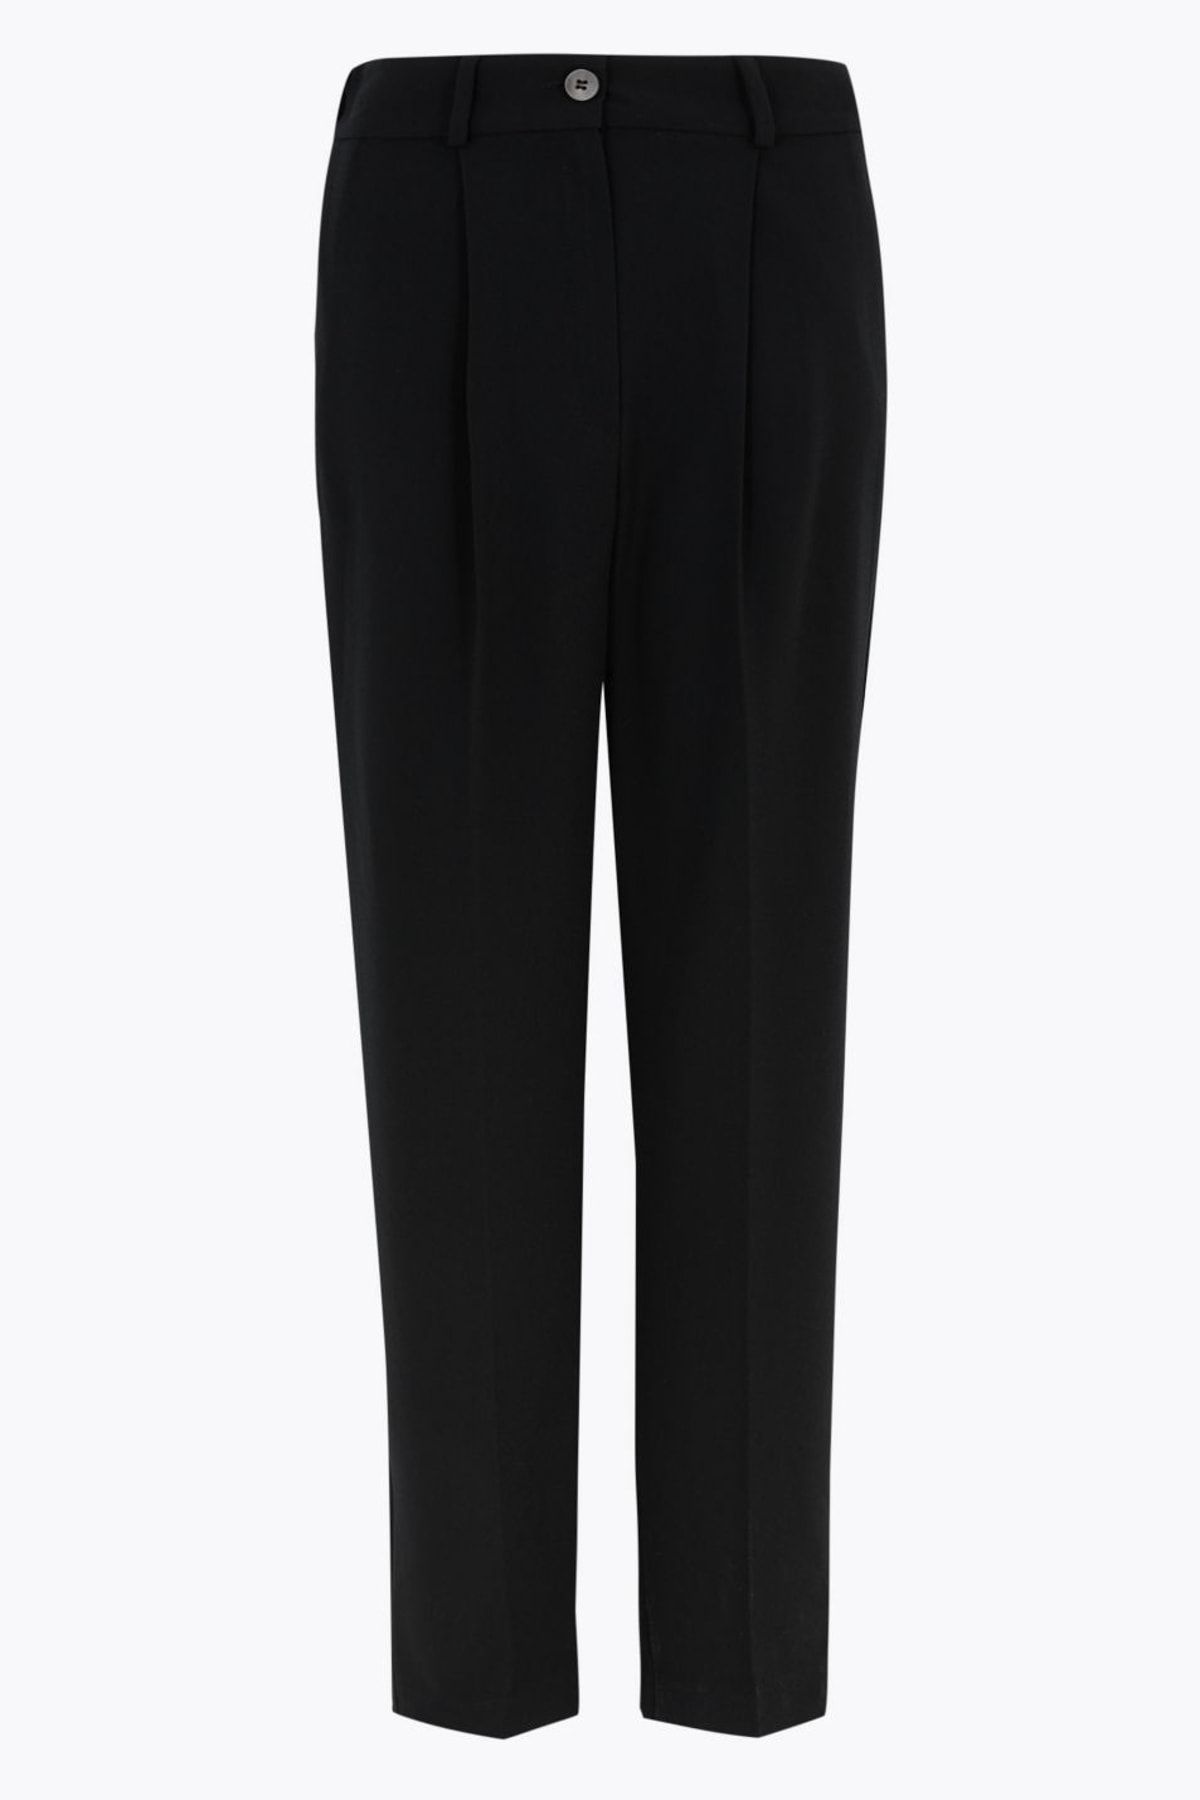 Marks & Spencer Kadın Siyah Tapered Leg 7/8 Pantolon T59005797